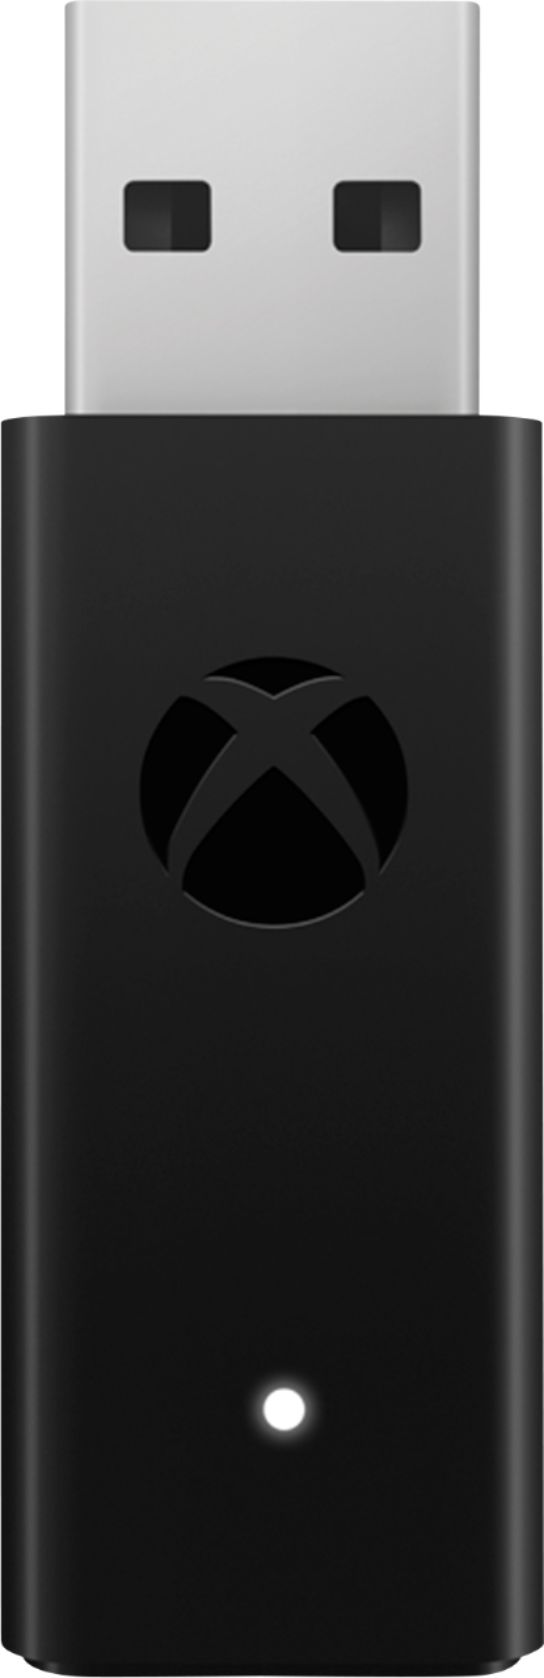 shield desirable Nursery rhymes Microsoft Xbox Wireless Adapter for Windows 10 Black 6HN-00002 - Best Buy